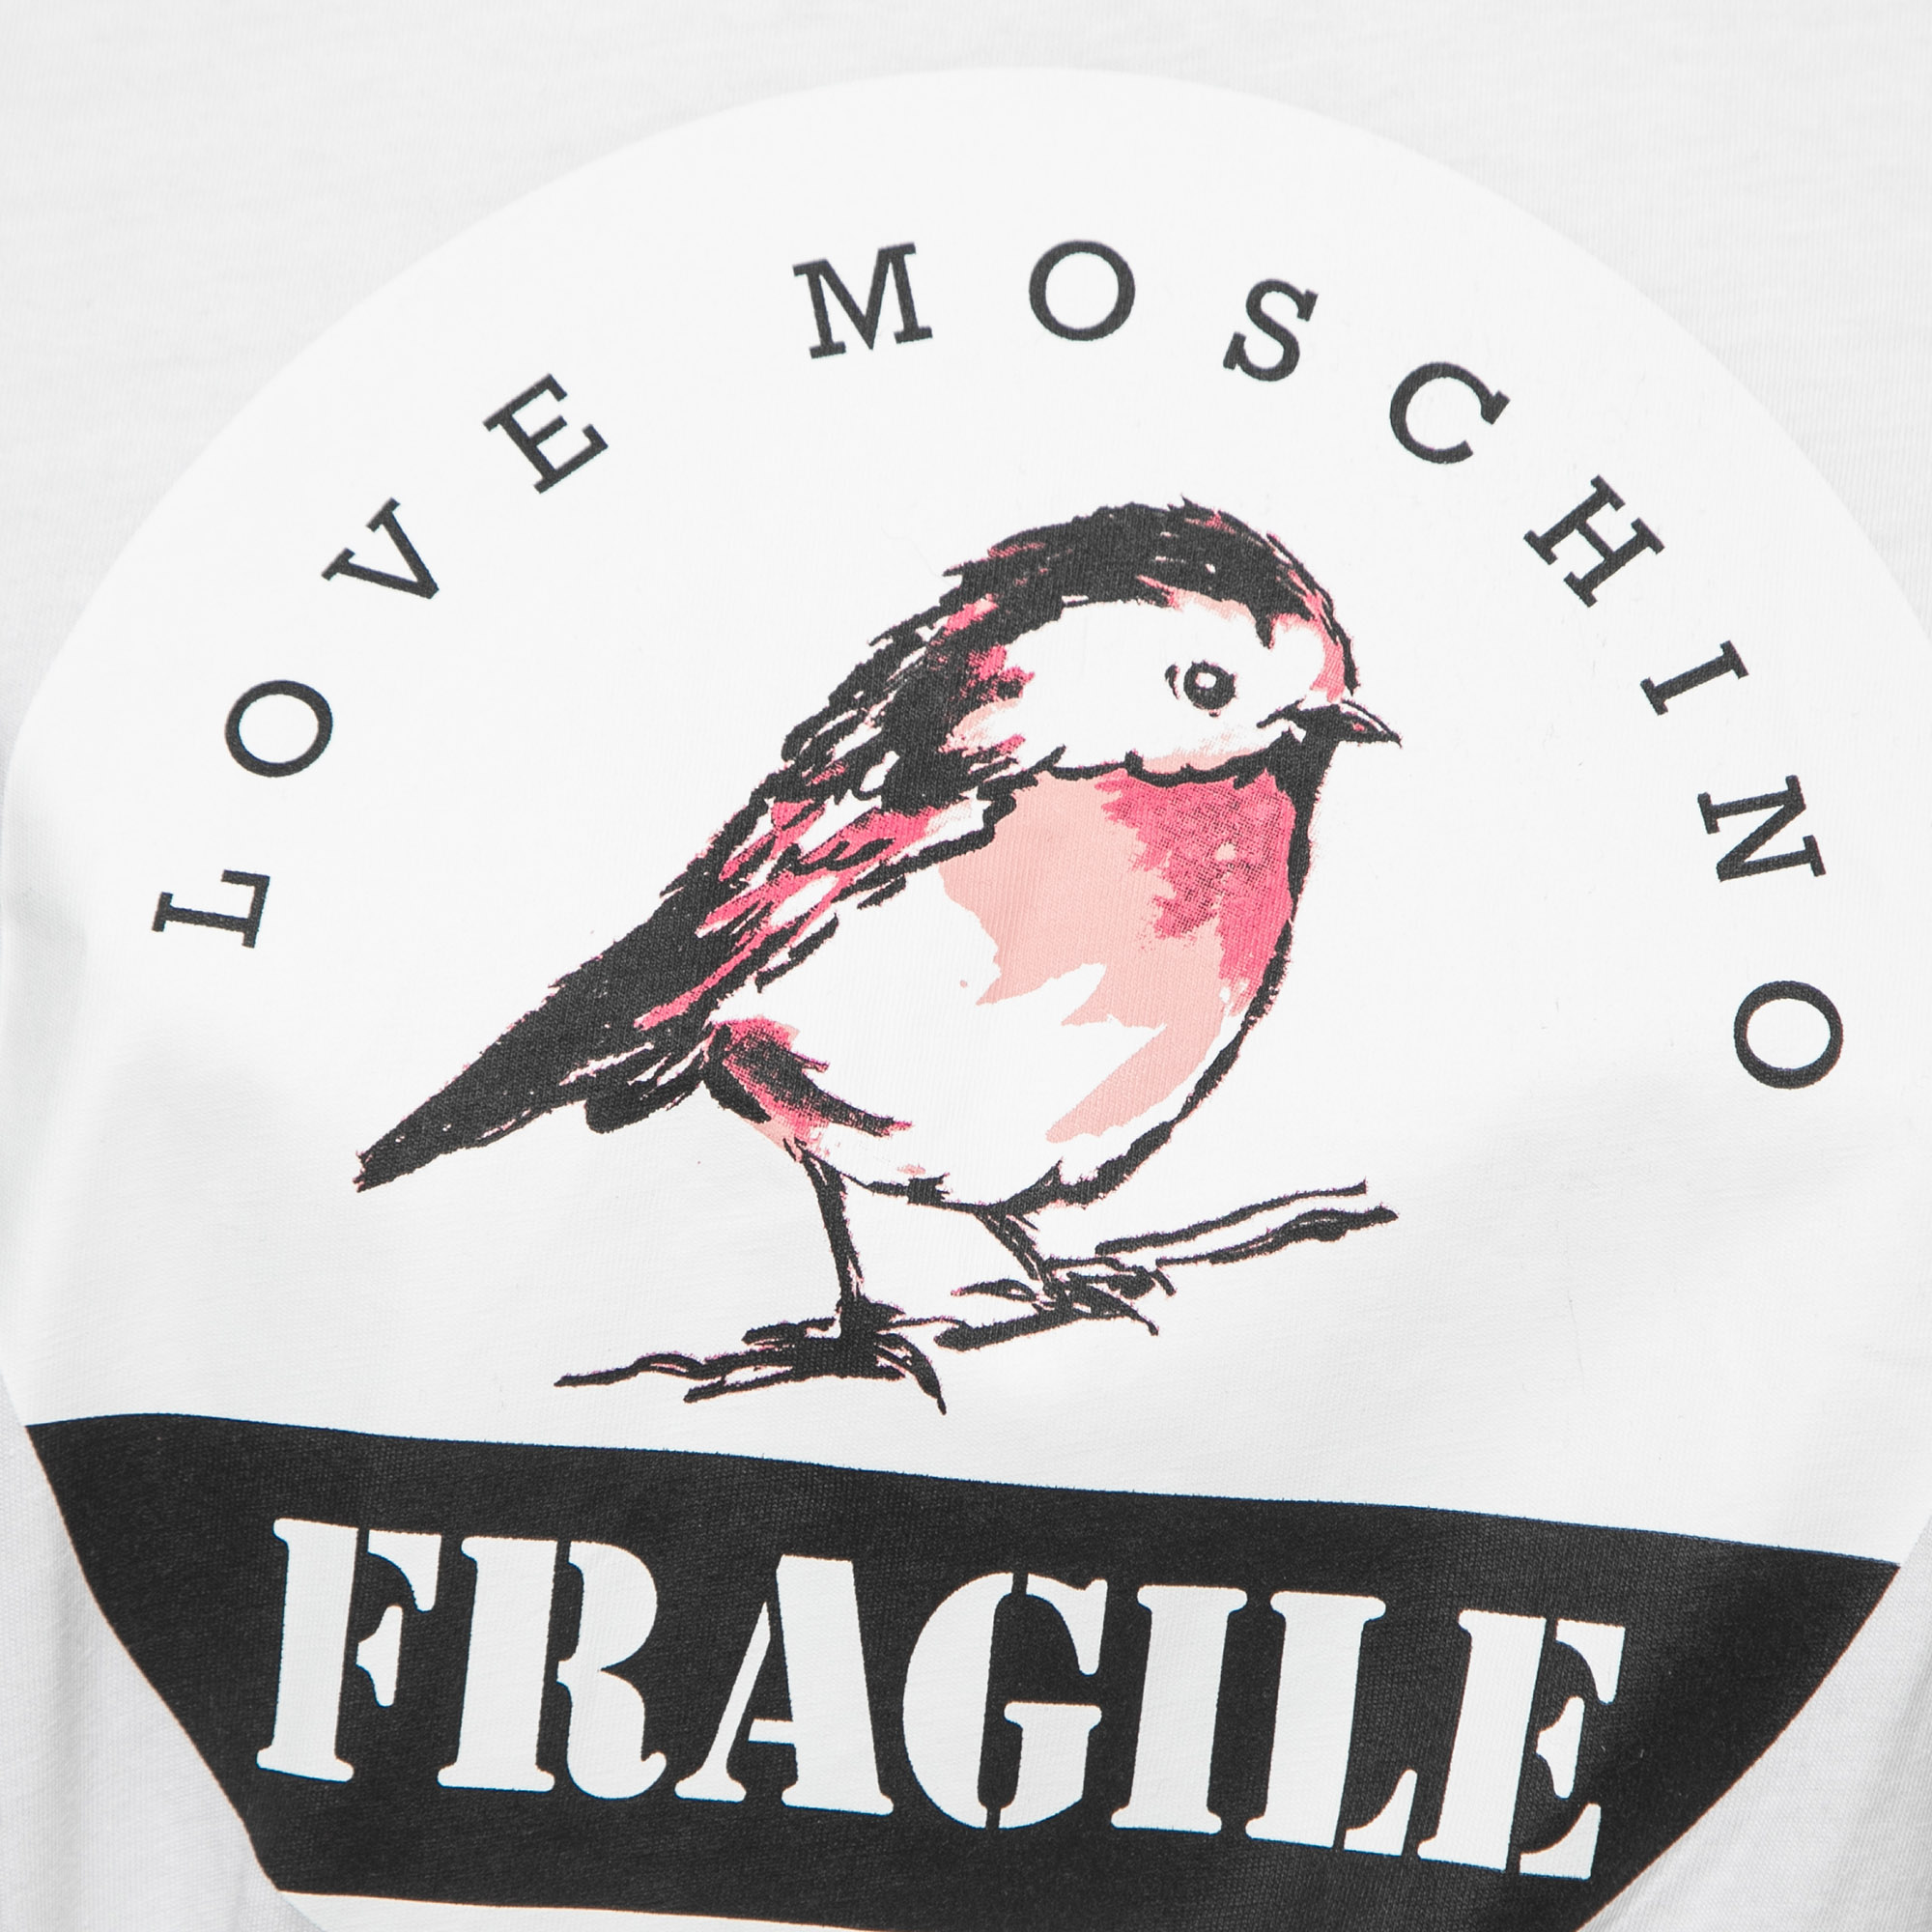 Love Moschino White Logo Print Cotton Draped Half Sleeve T-Shirt S